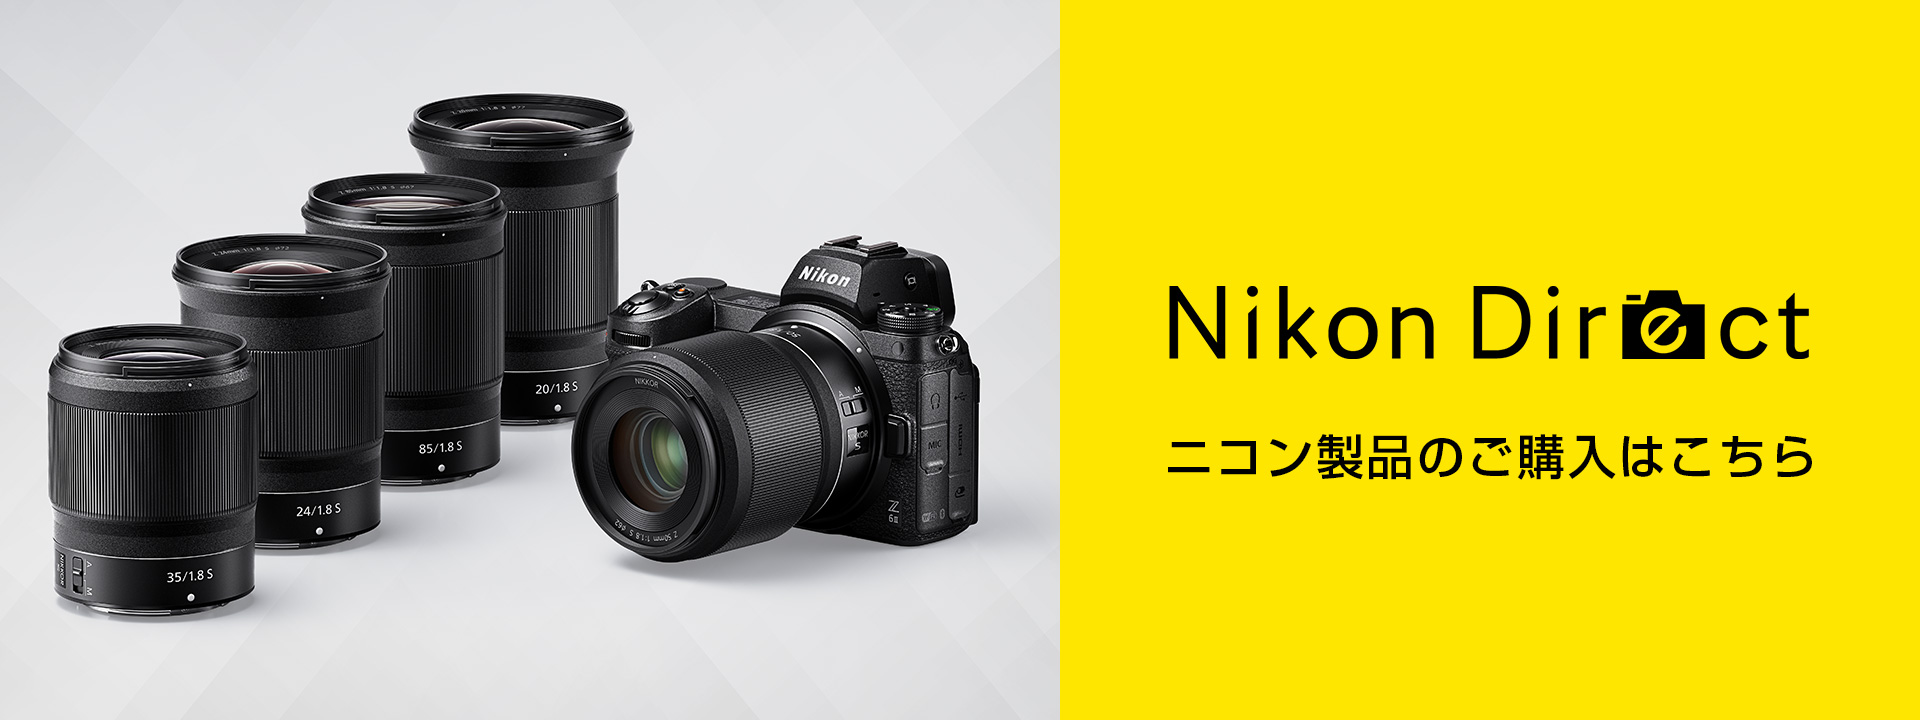 NikonDirect - ニコンダイレクト